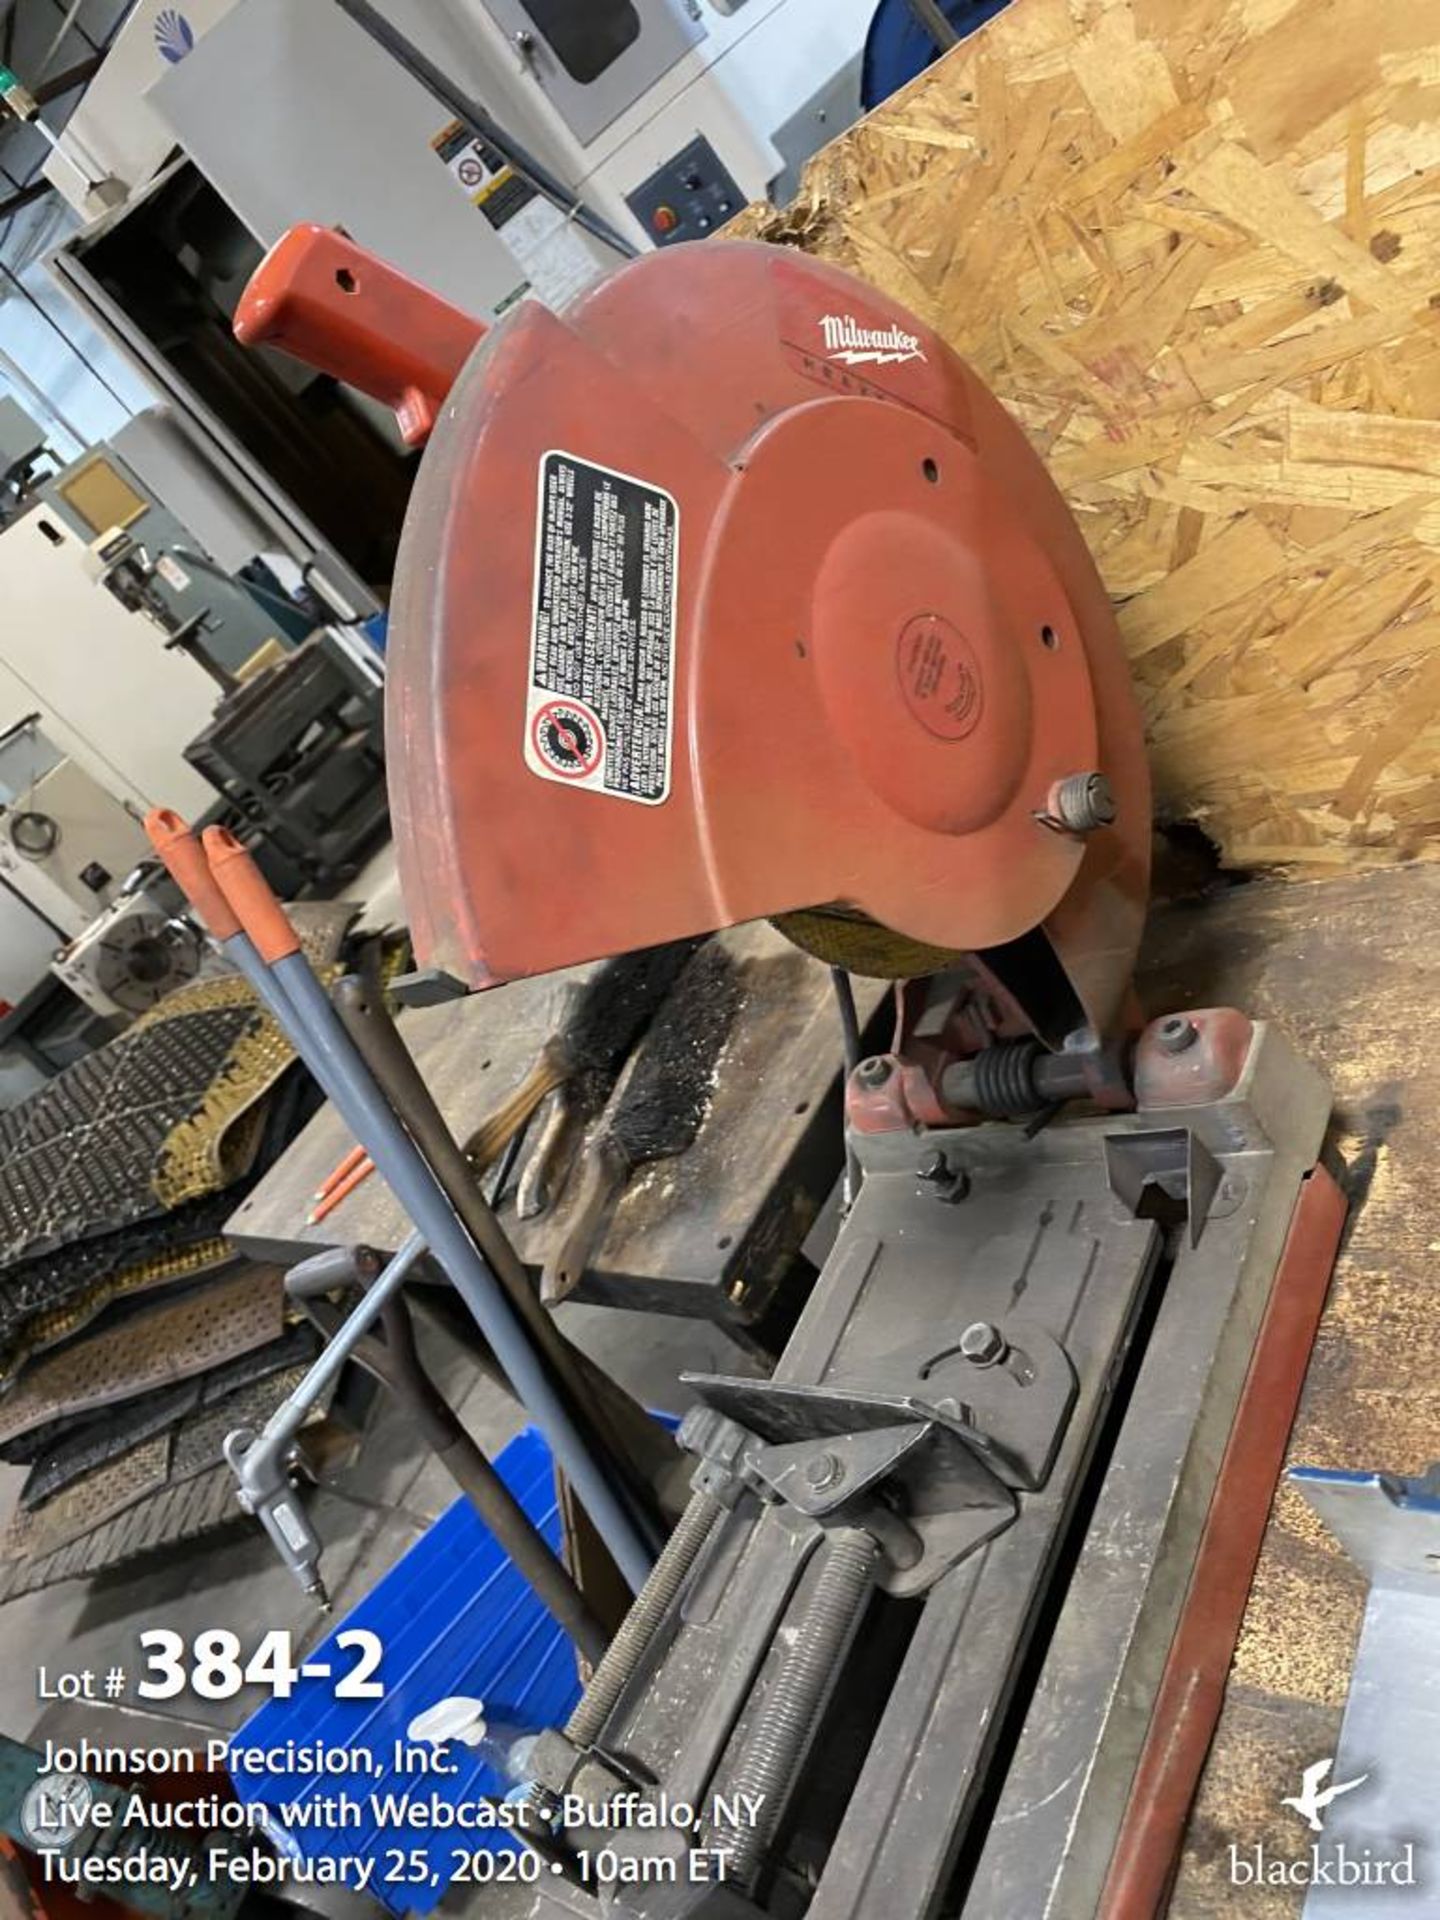 Milwaukee chop saw model 6176-20, 10" mitre saw - Image 2 of 2